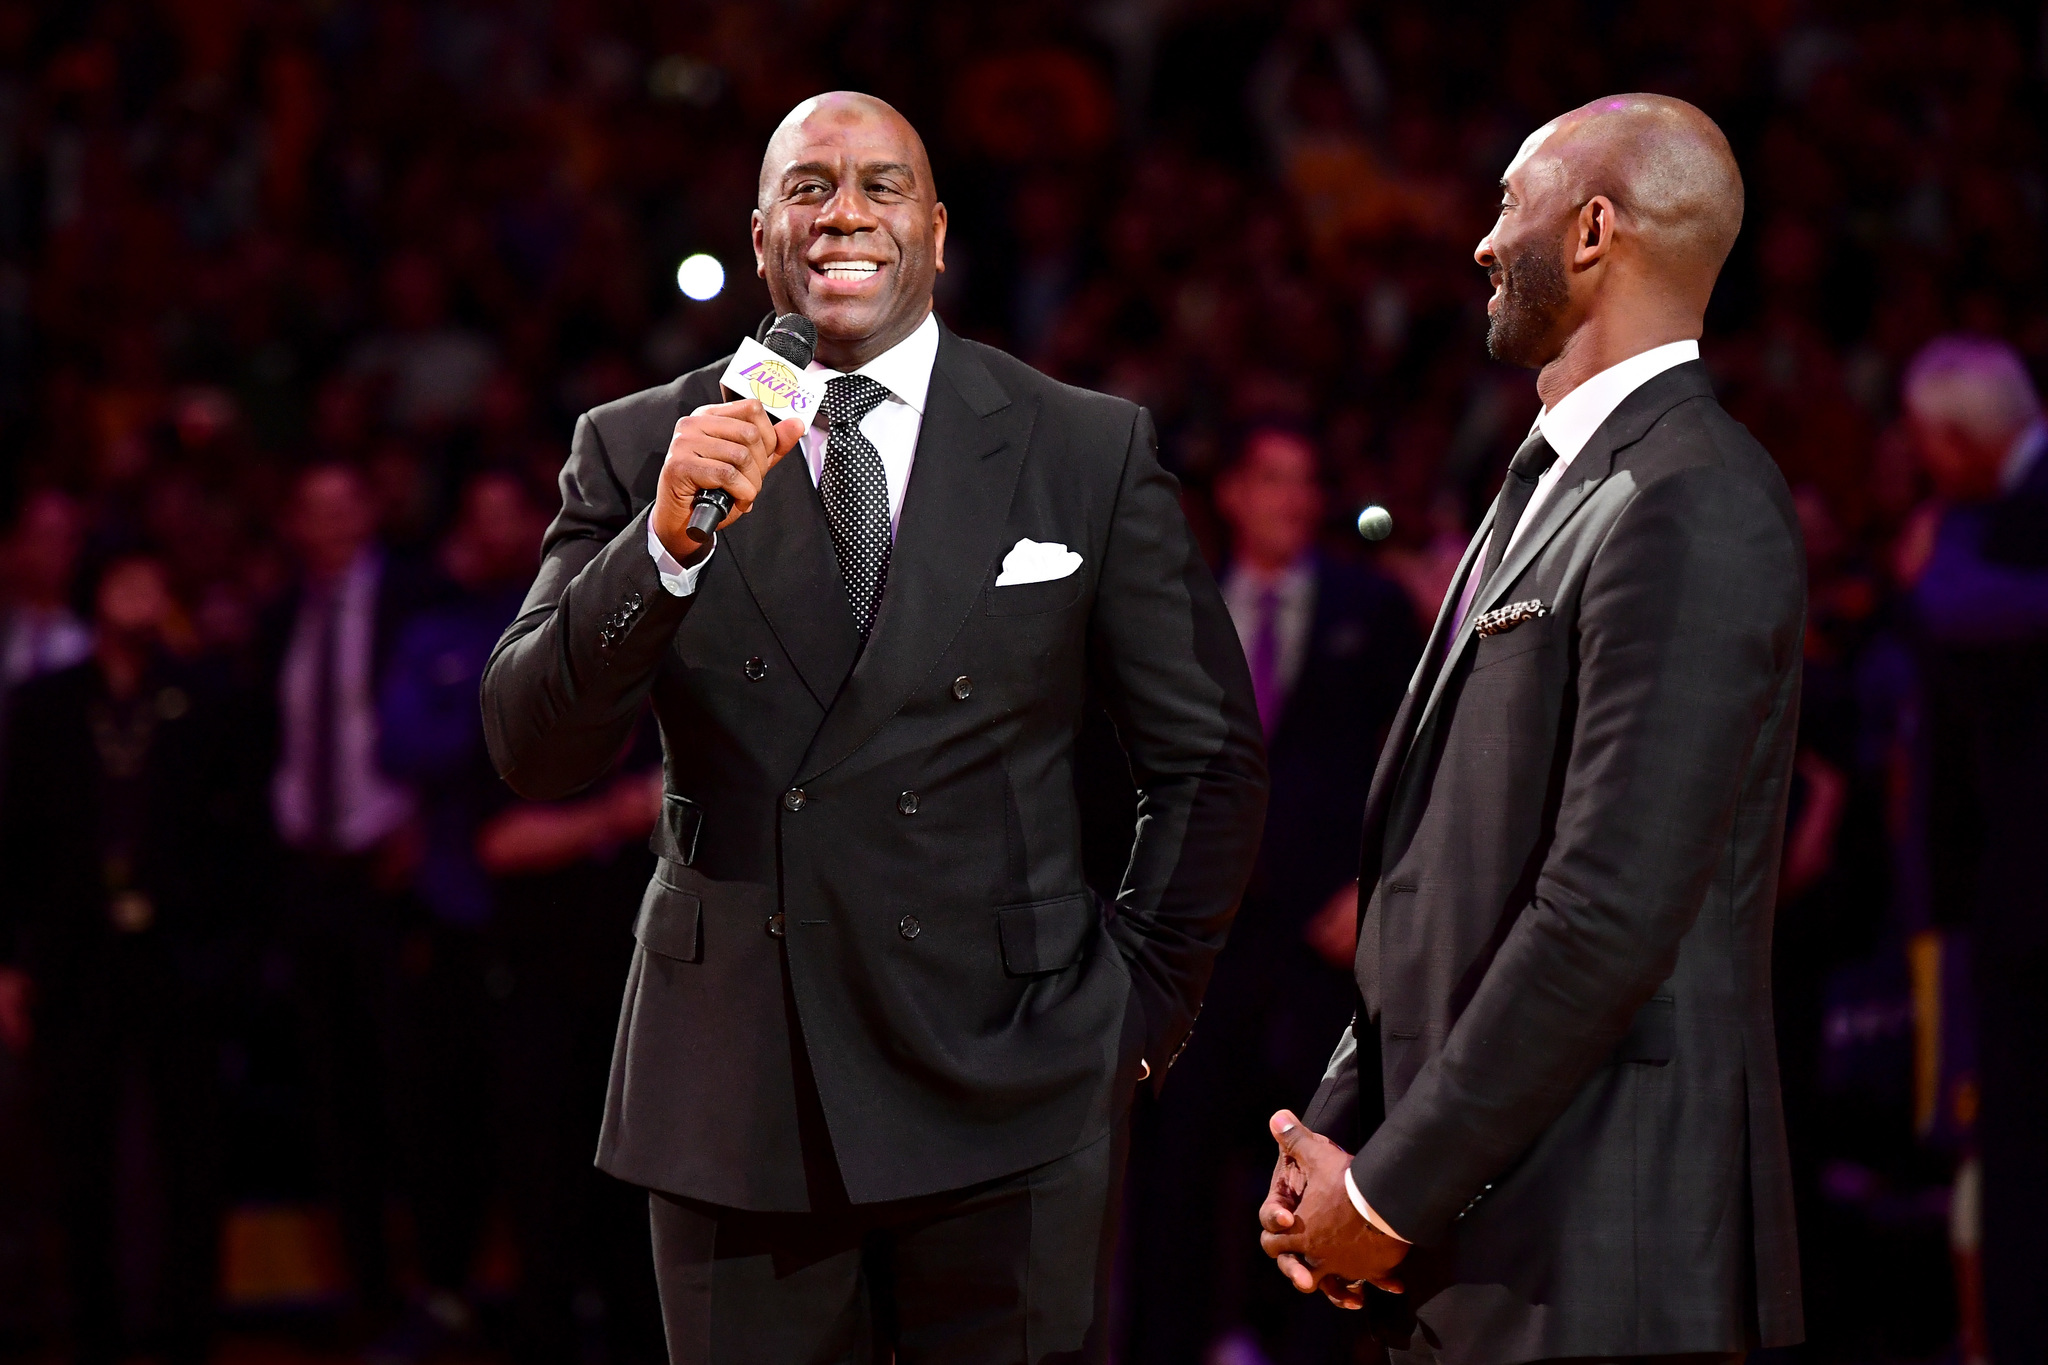 75 Greatest Lakers: How we ranked Kobe, Magic, Kareem and LeBron